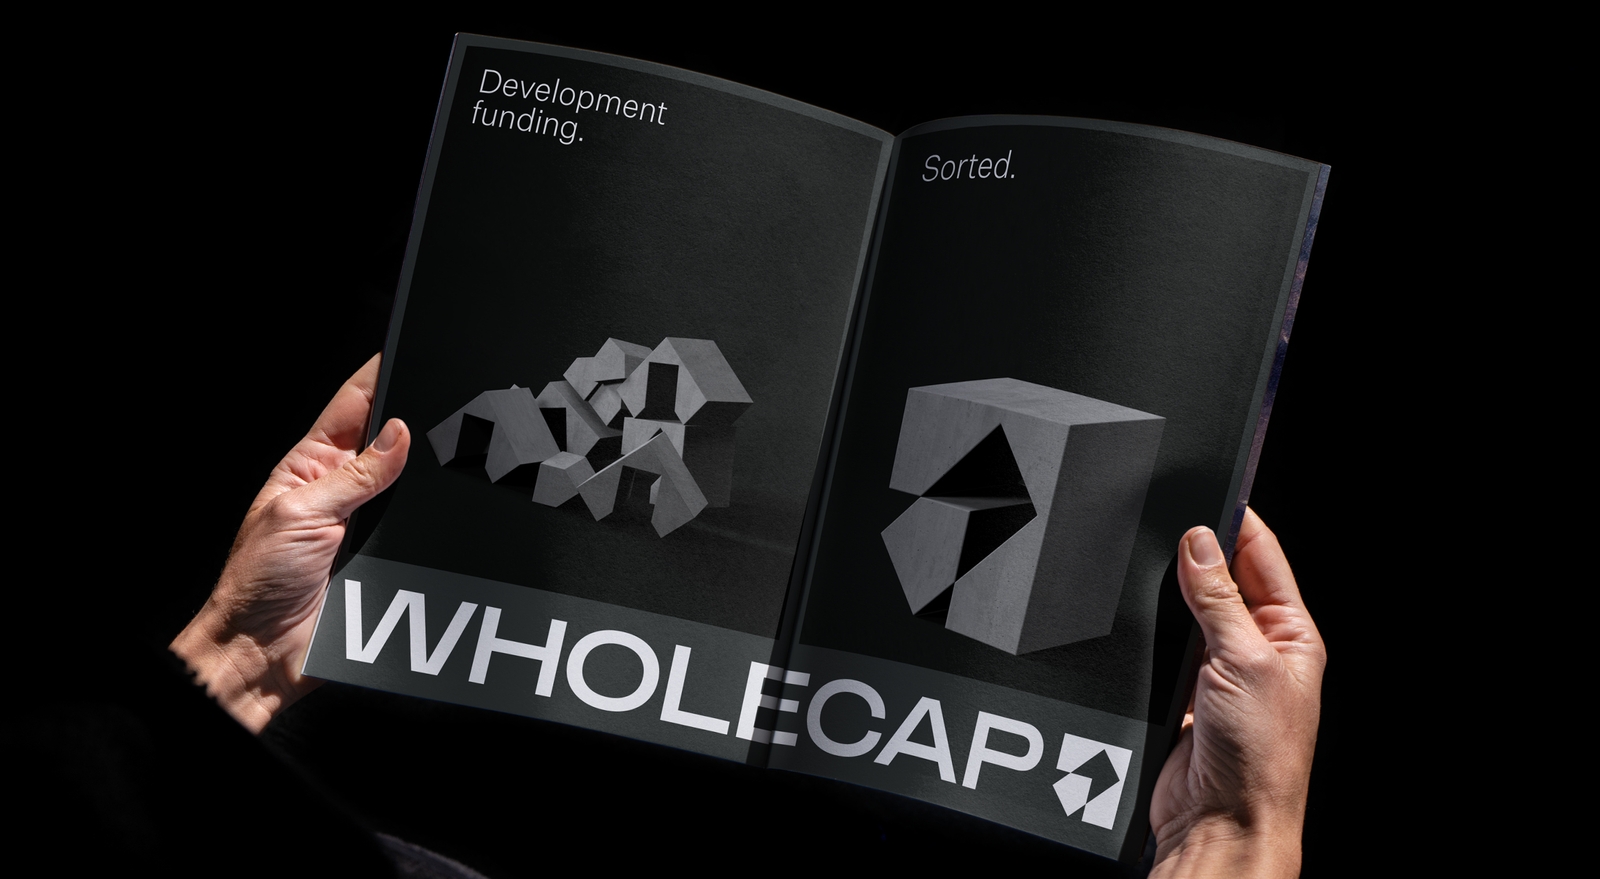 Wholecap - Brand and Website Design - Development Funding, Sorted Brochure Spread | Atollon - a design company